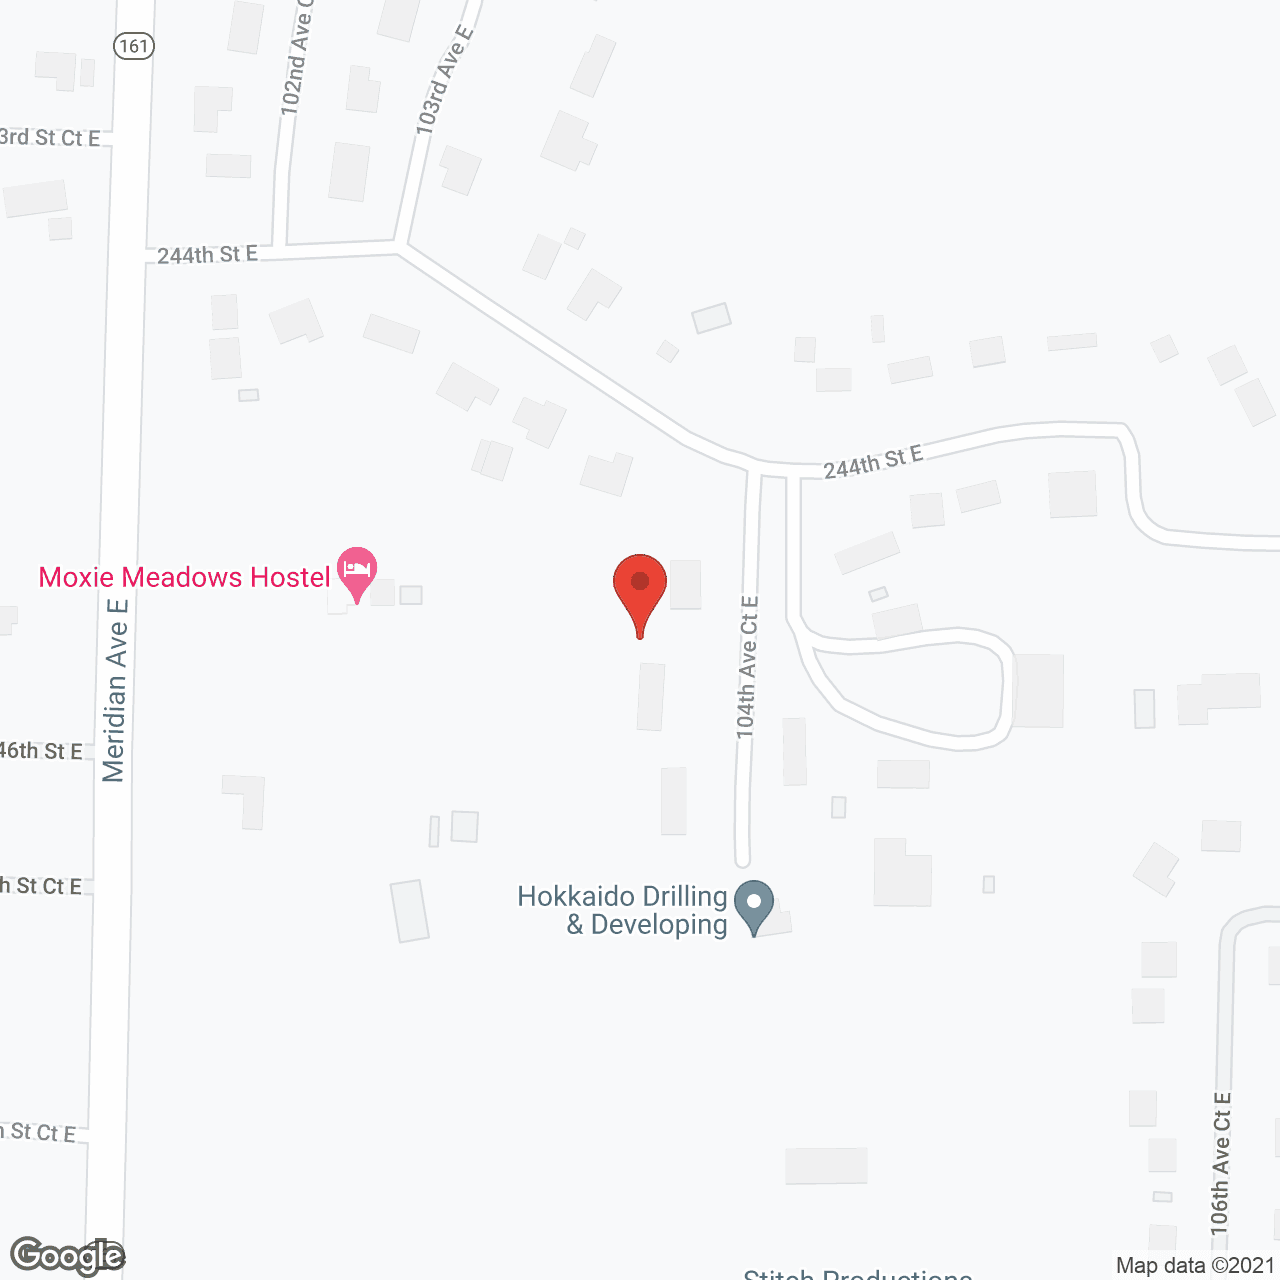 Allegiance HomeCare - Silverdale, WA in google map